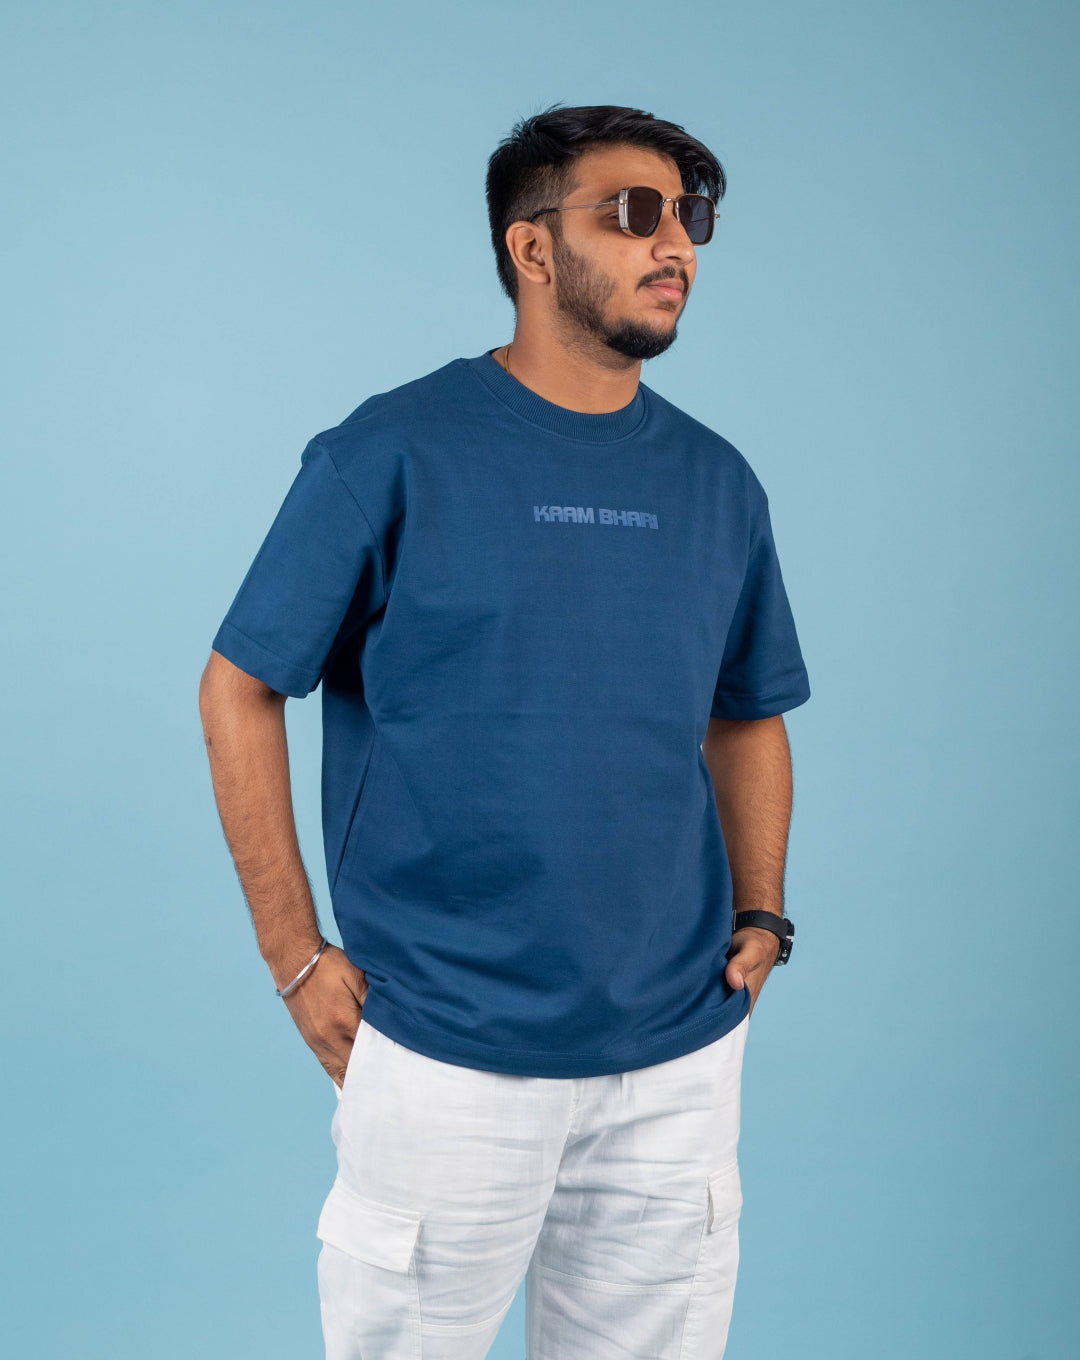 Kaam Bhari Signature | Over Sized T-Shirt |3D Print | Teal Blue